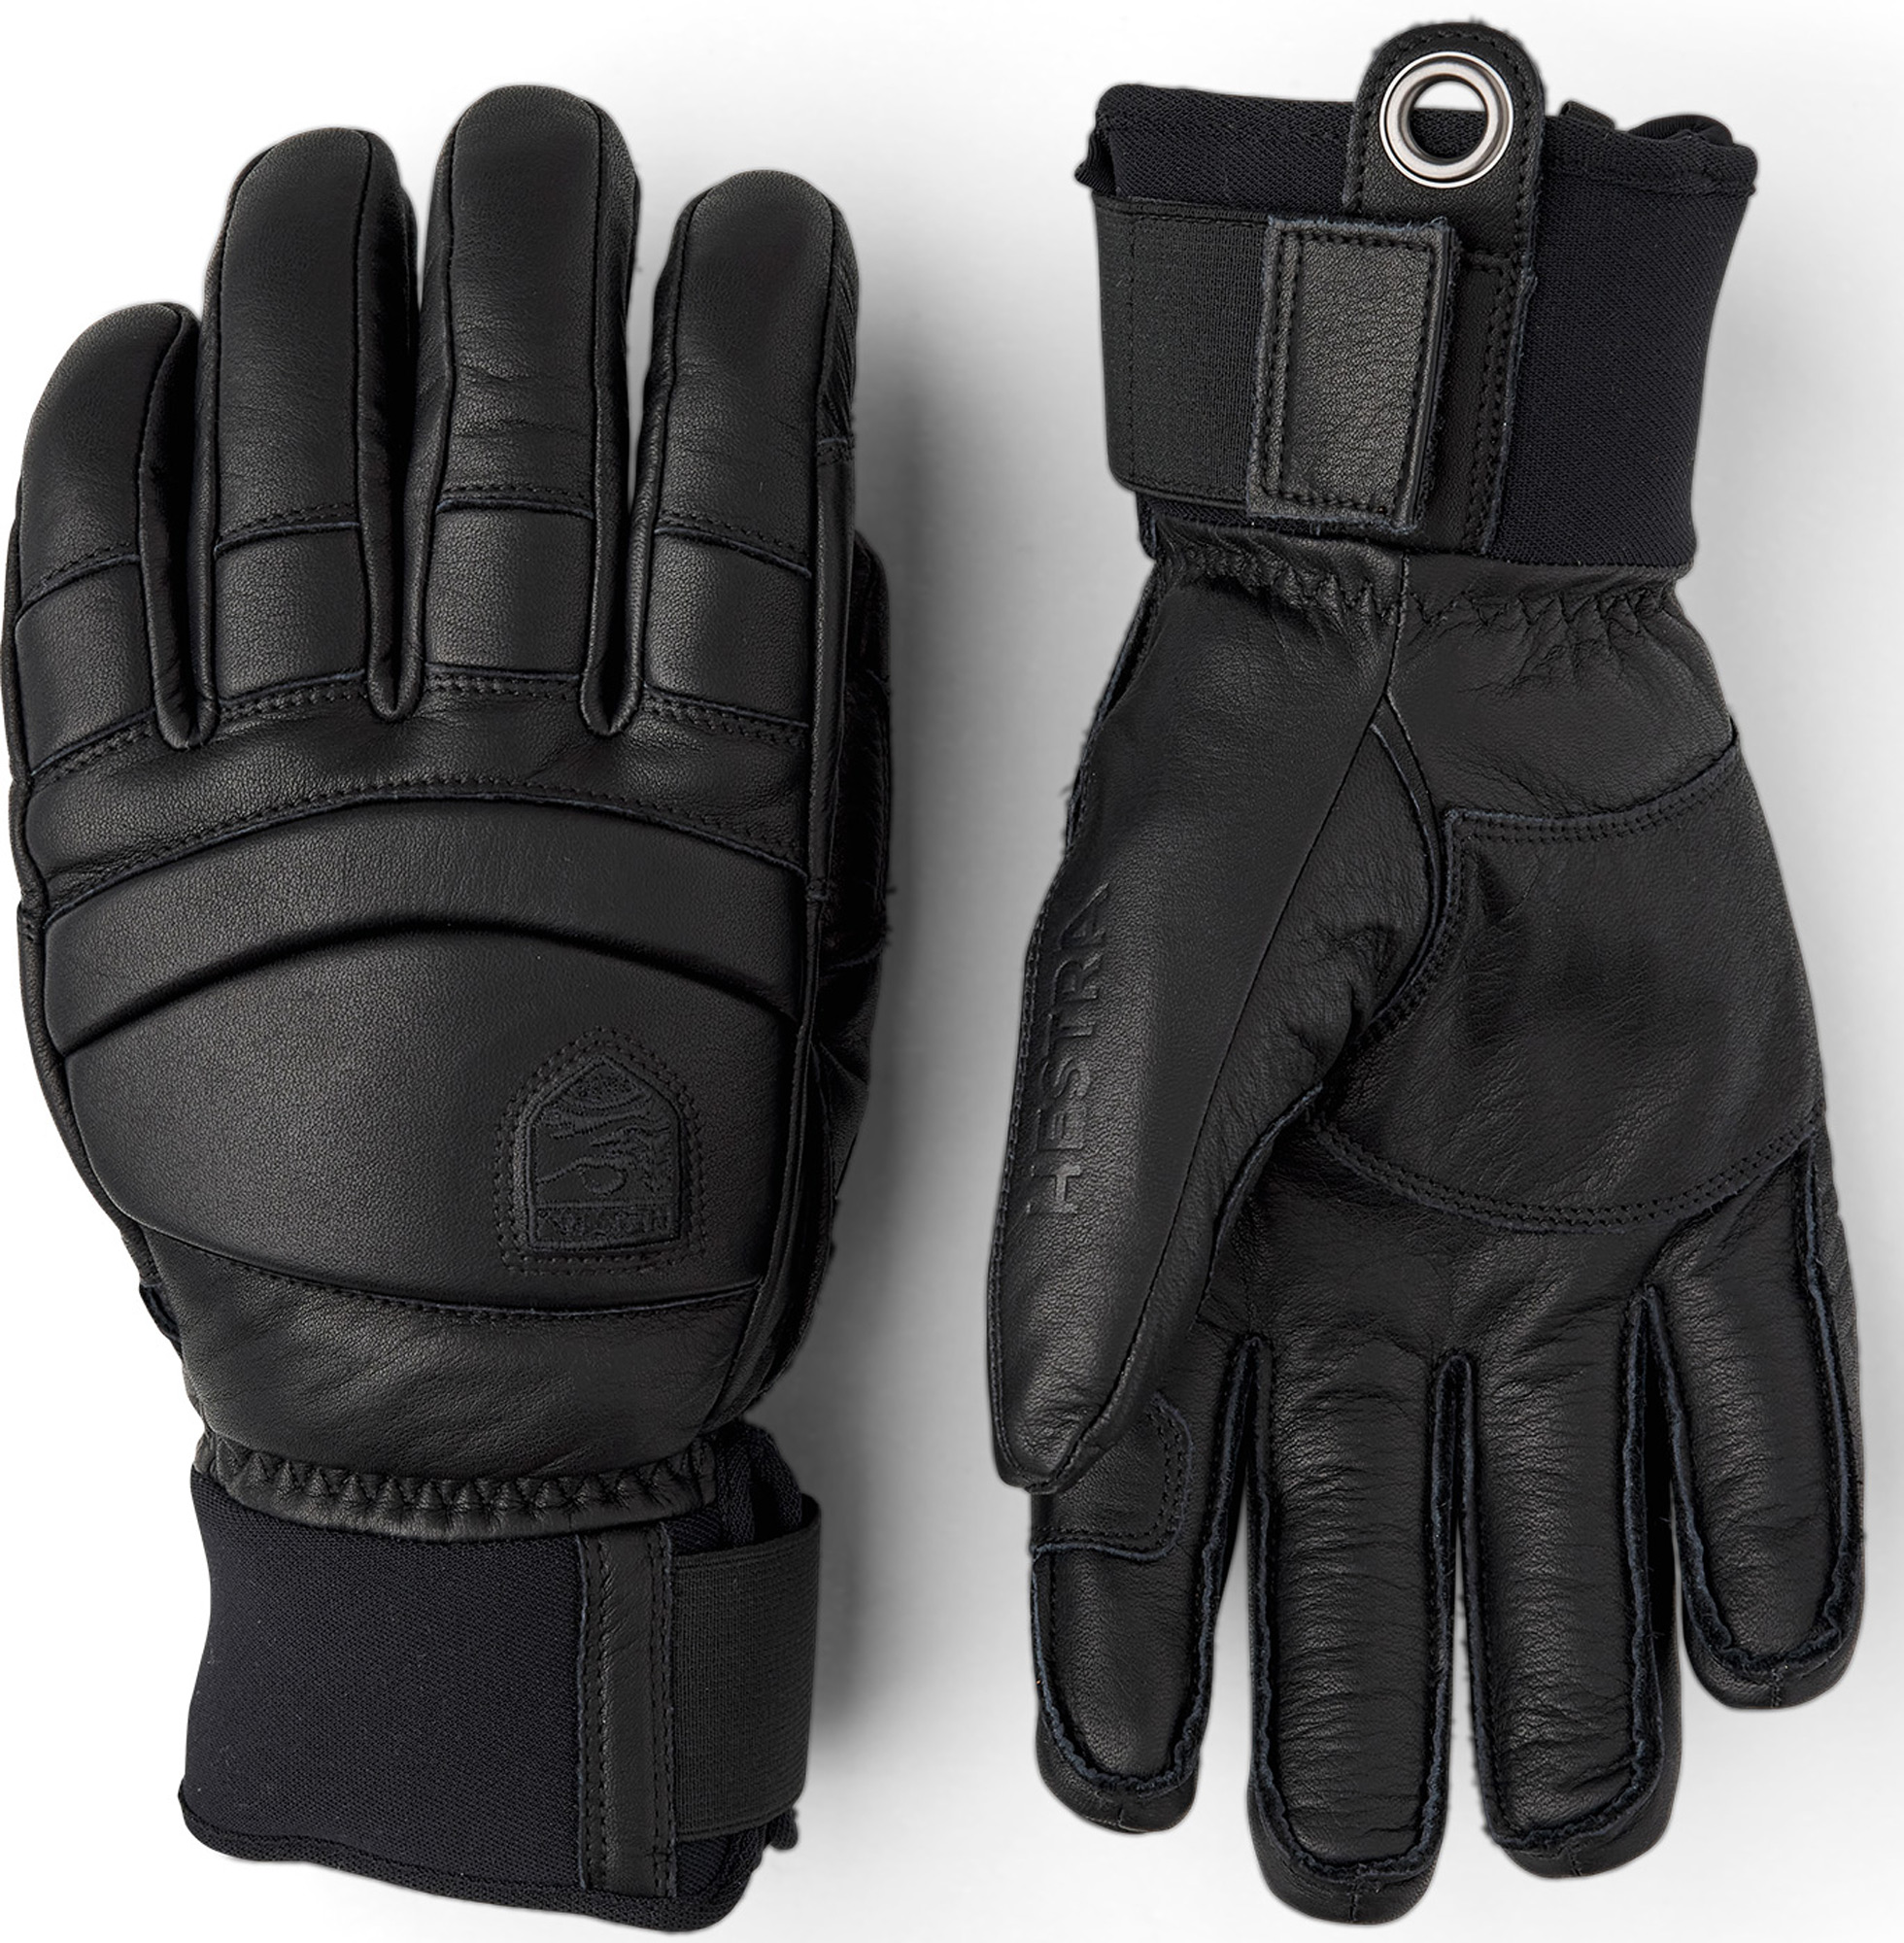 Women's Gloves | UK Stock, Shipped from Cornwall - SkiGloveShop